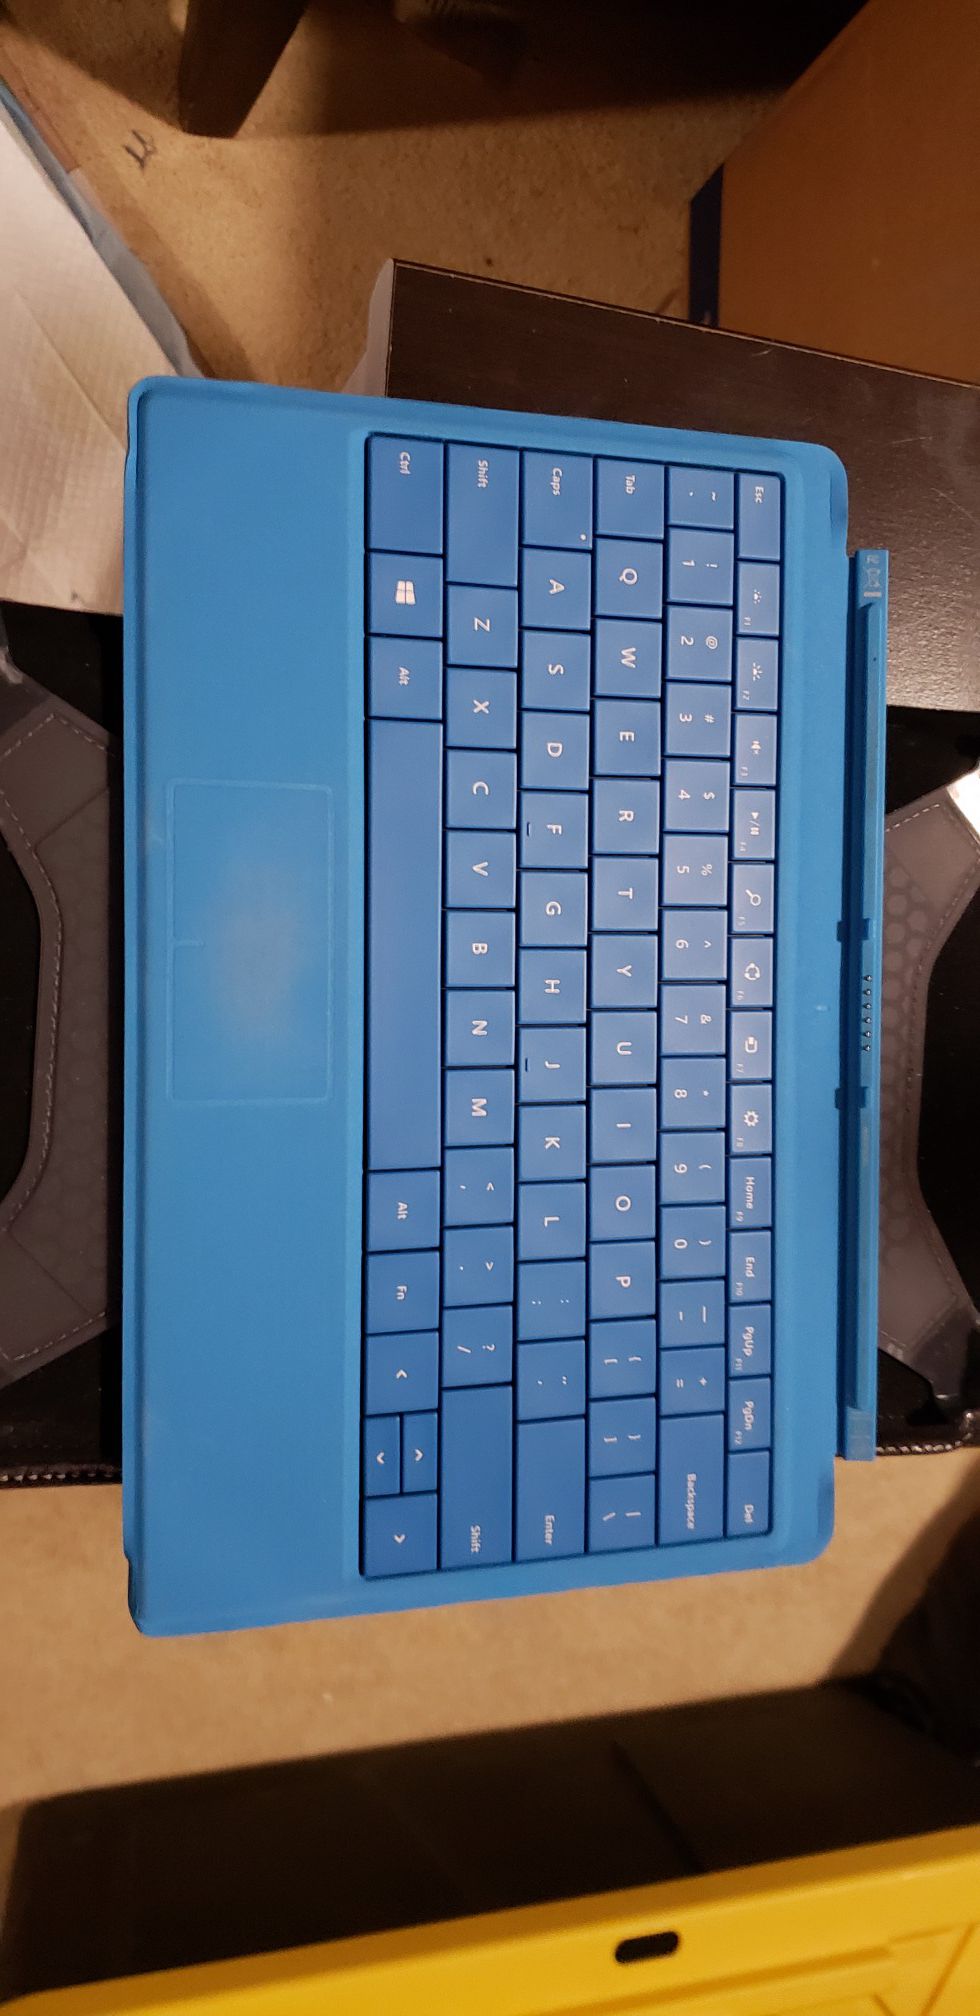 Microsoft blue keyboard for Microsoft tablet